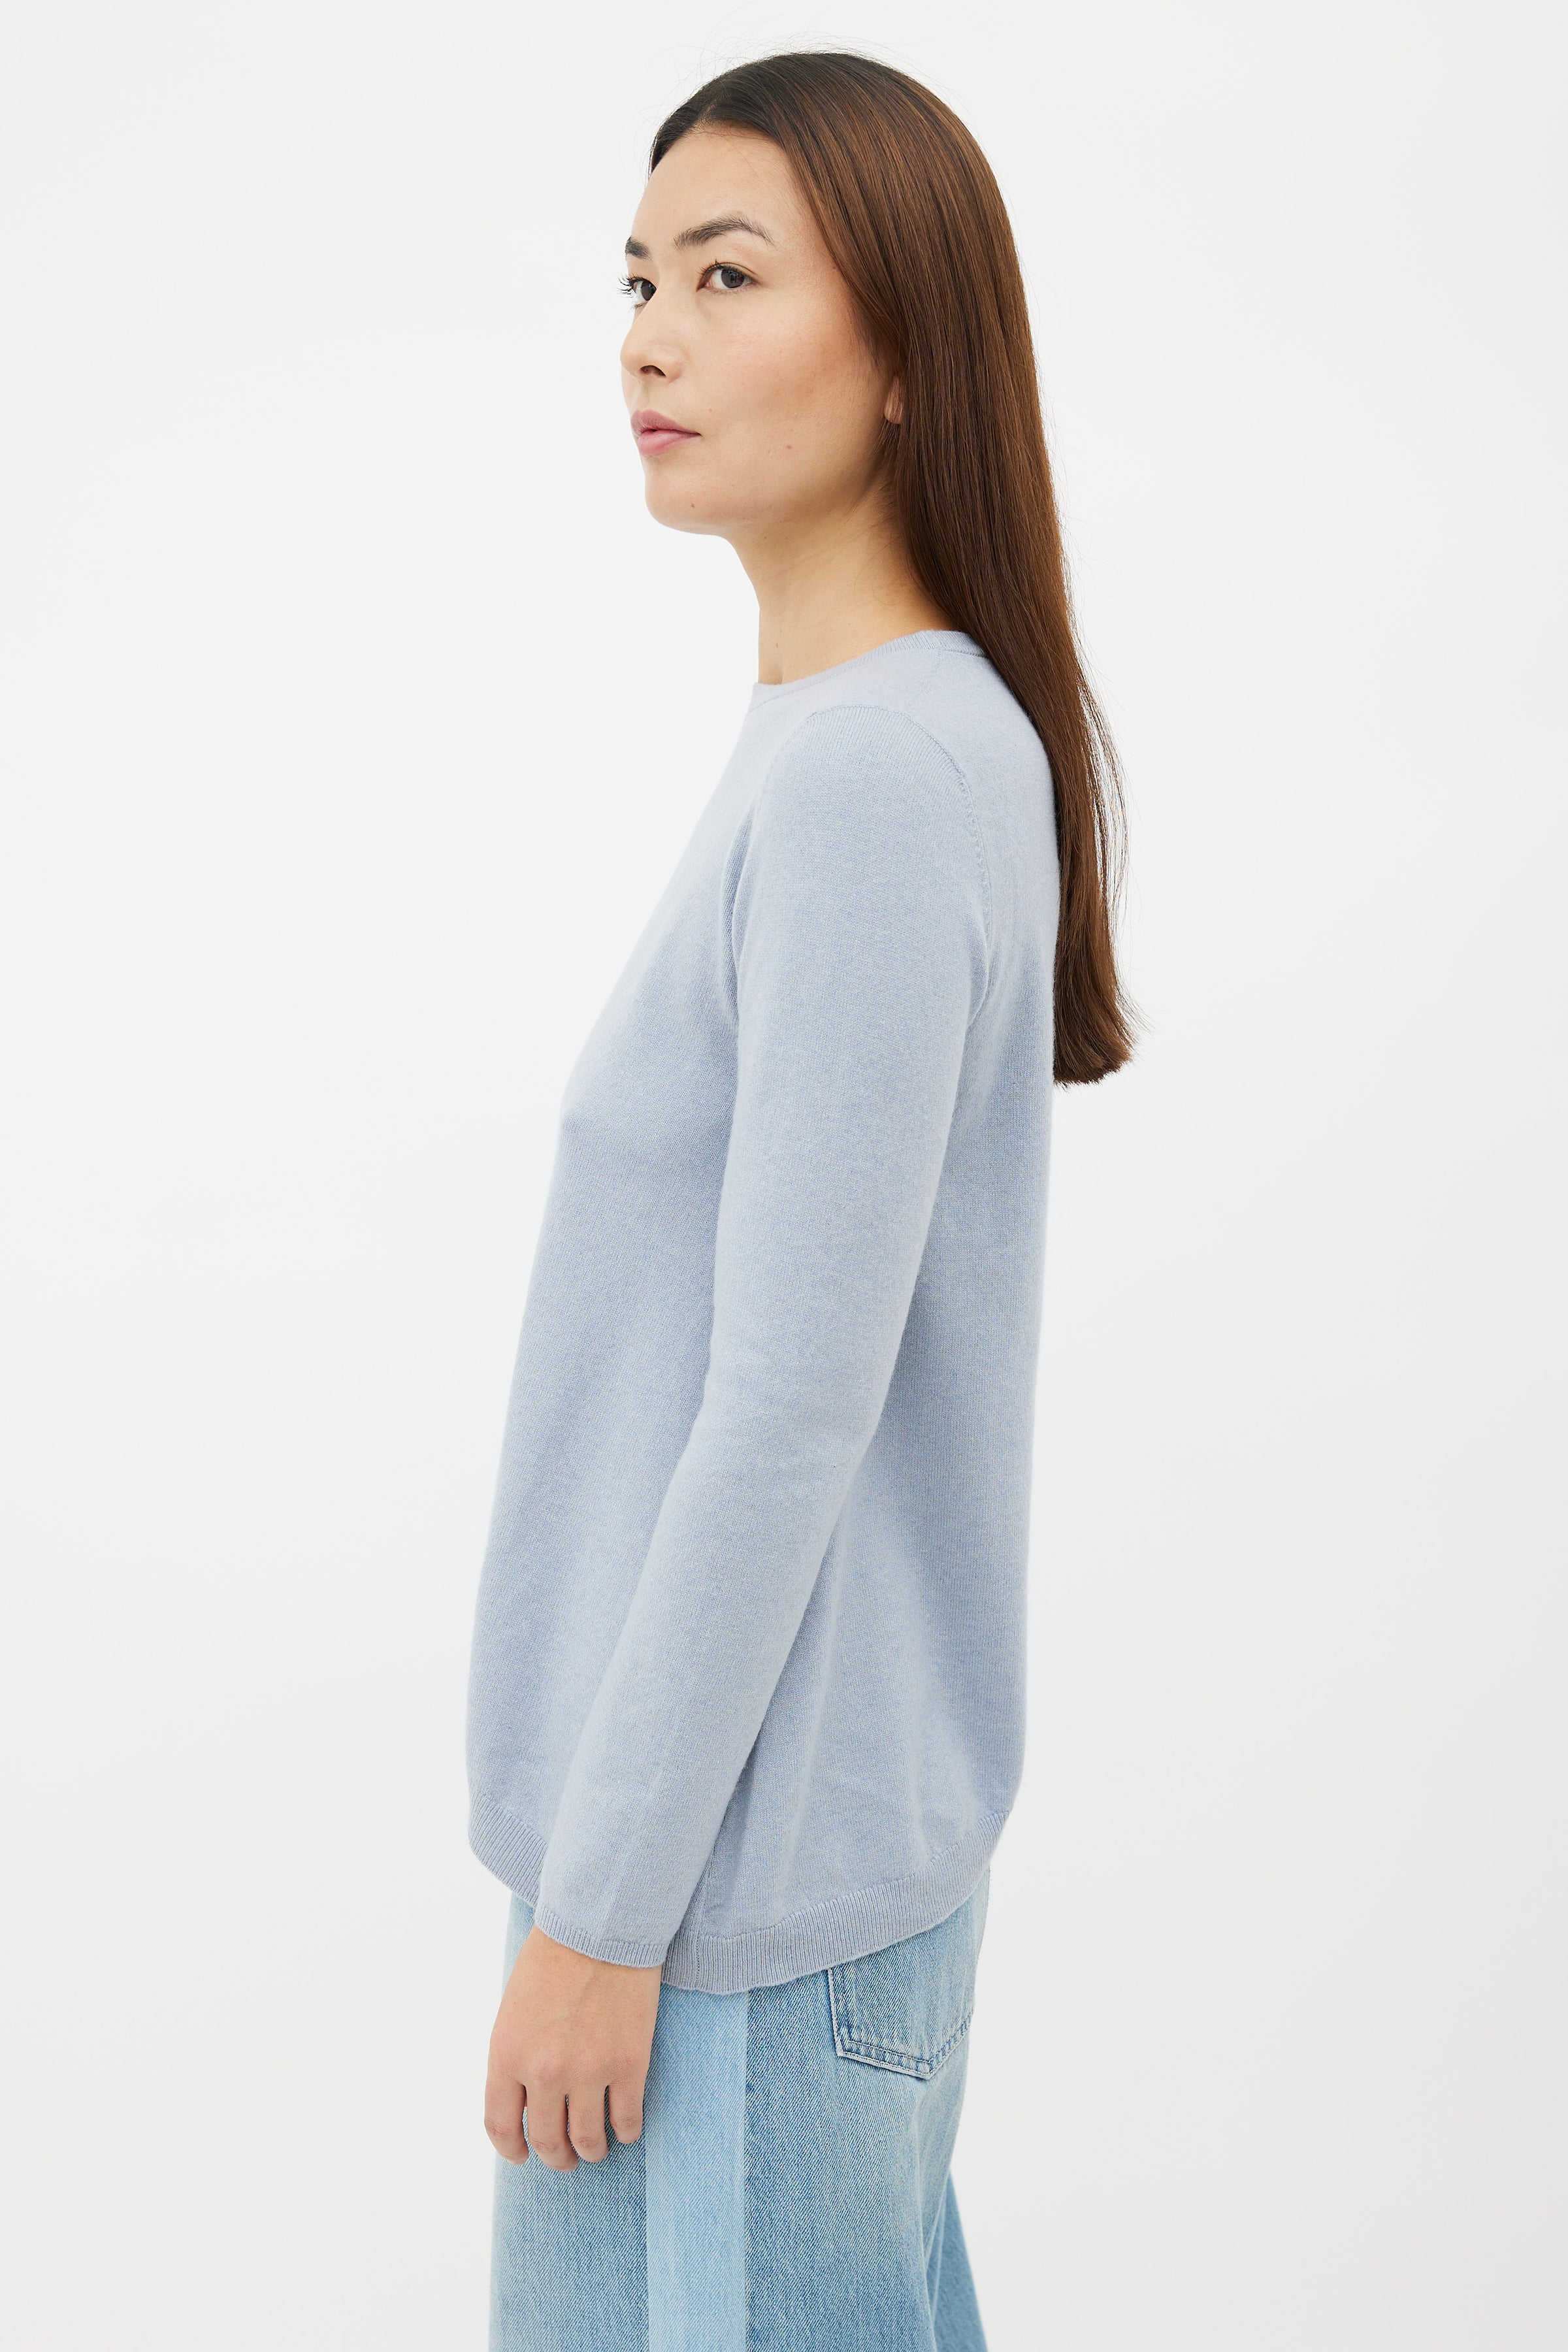 Brunello Cucinelli Women's Sweater - Blue - Sweaters